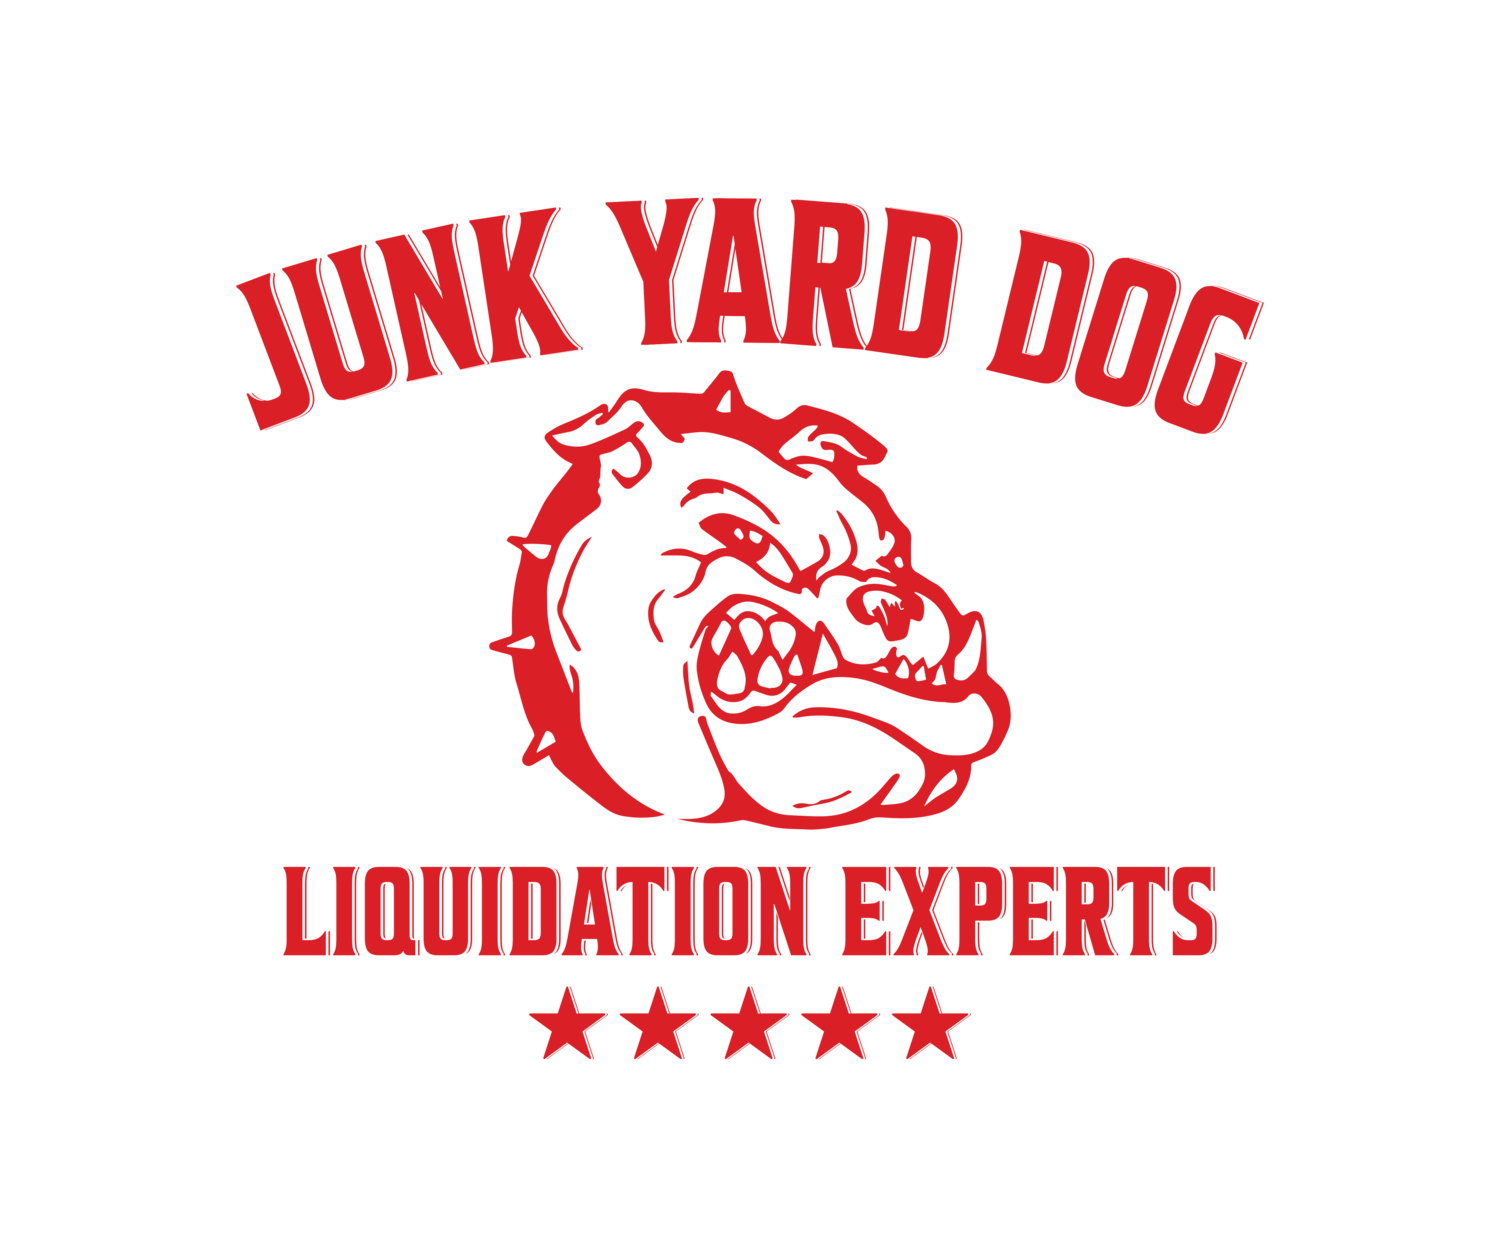 Junk Yard Dog Liquidation Experts